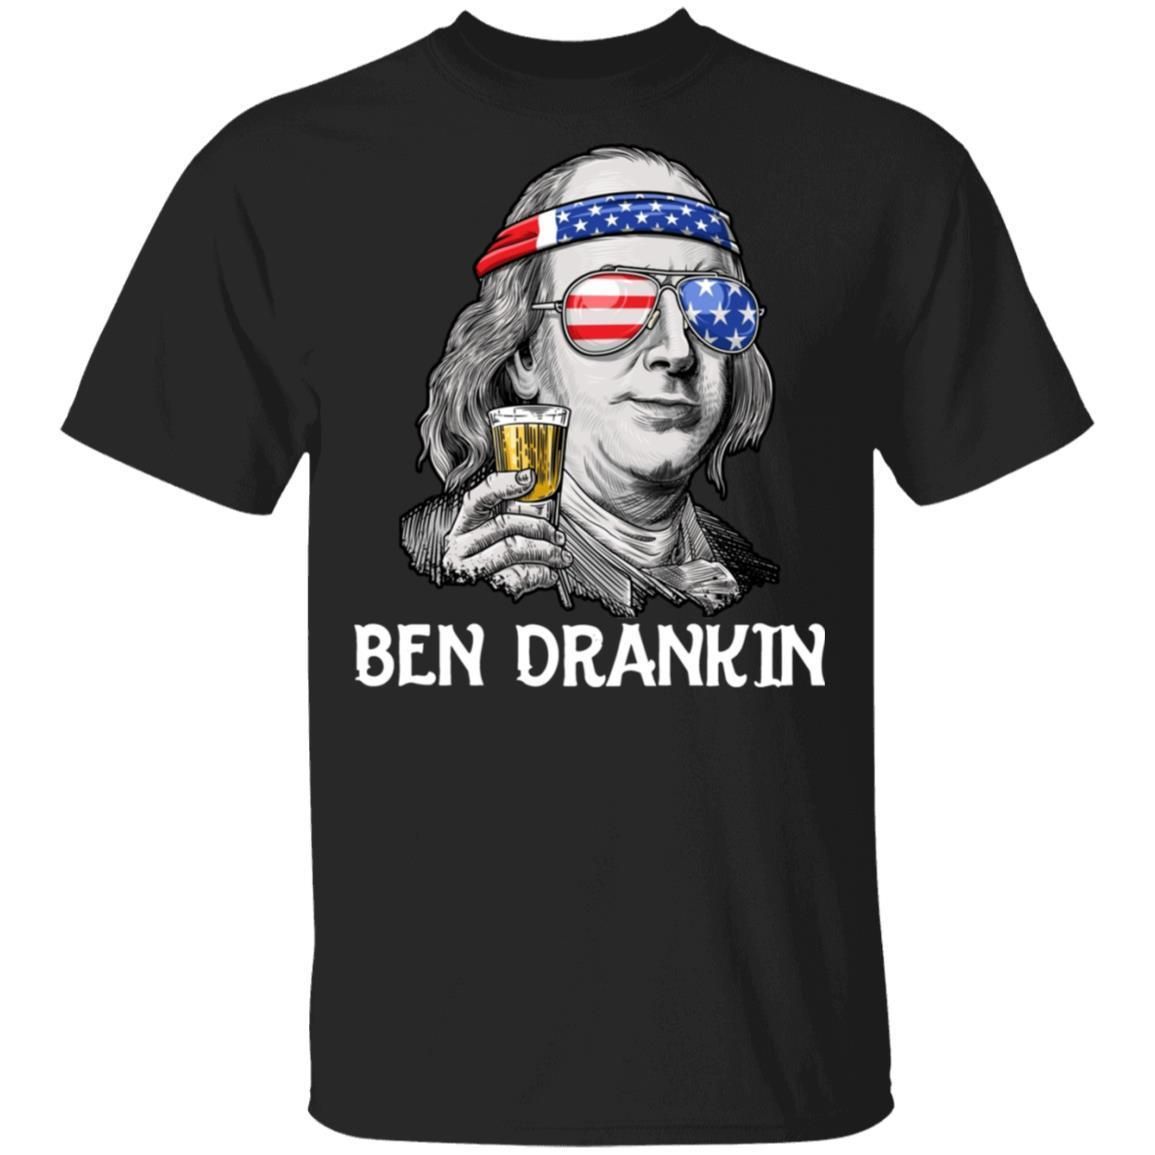 Ben Drankin Benjamin Franklin 4th of July Independence shirts